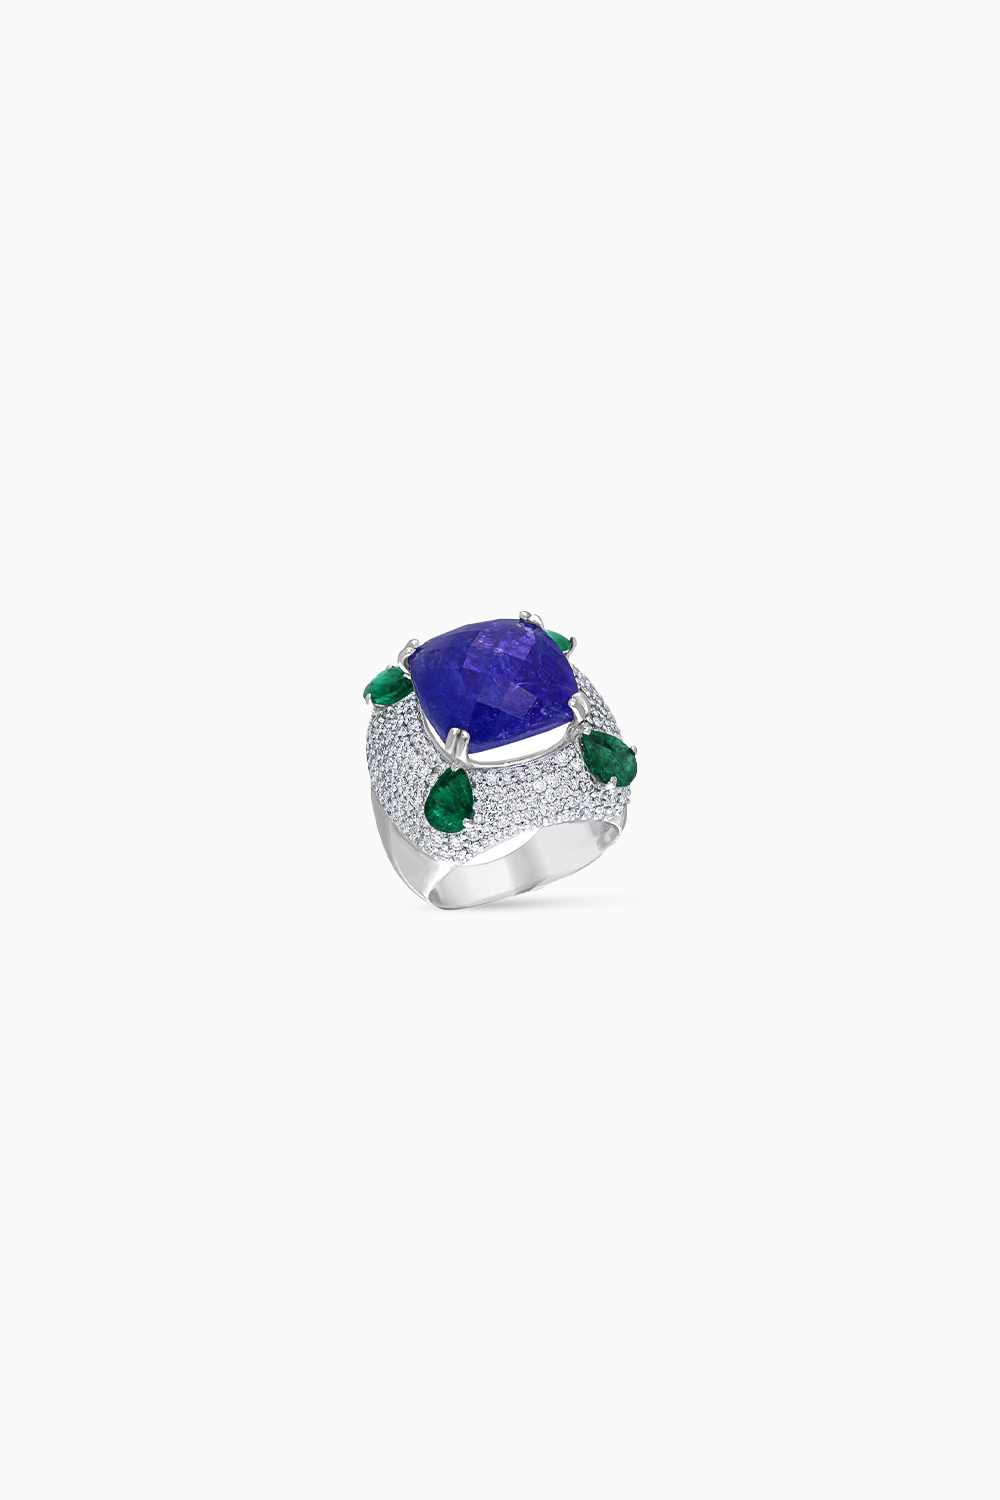 Azure Tanzanite Emerald and Diamond Cocktial Ring